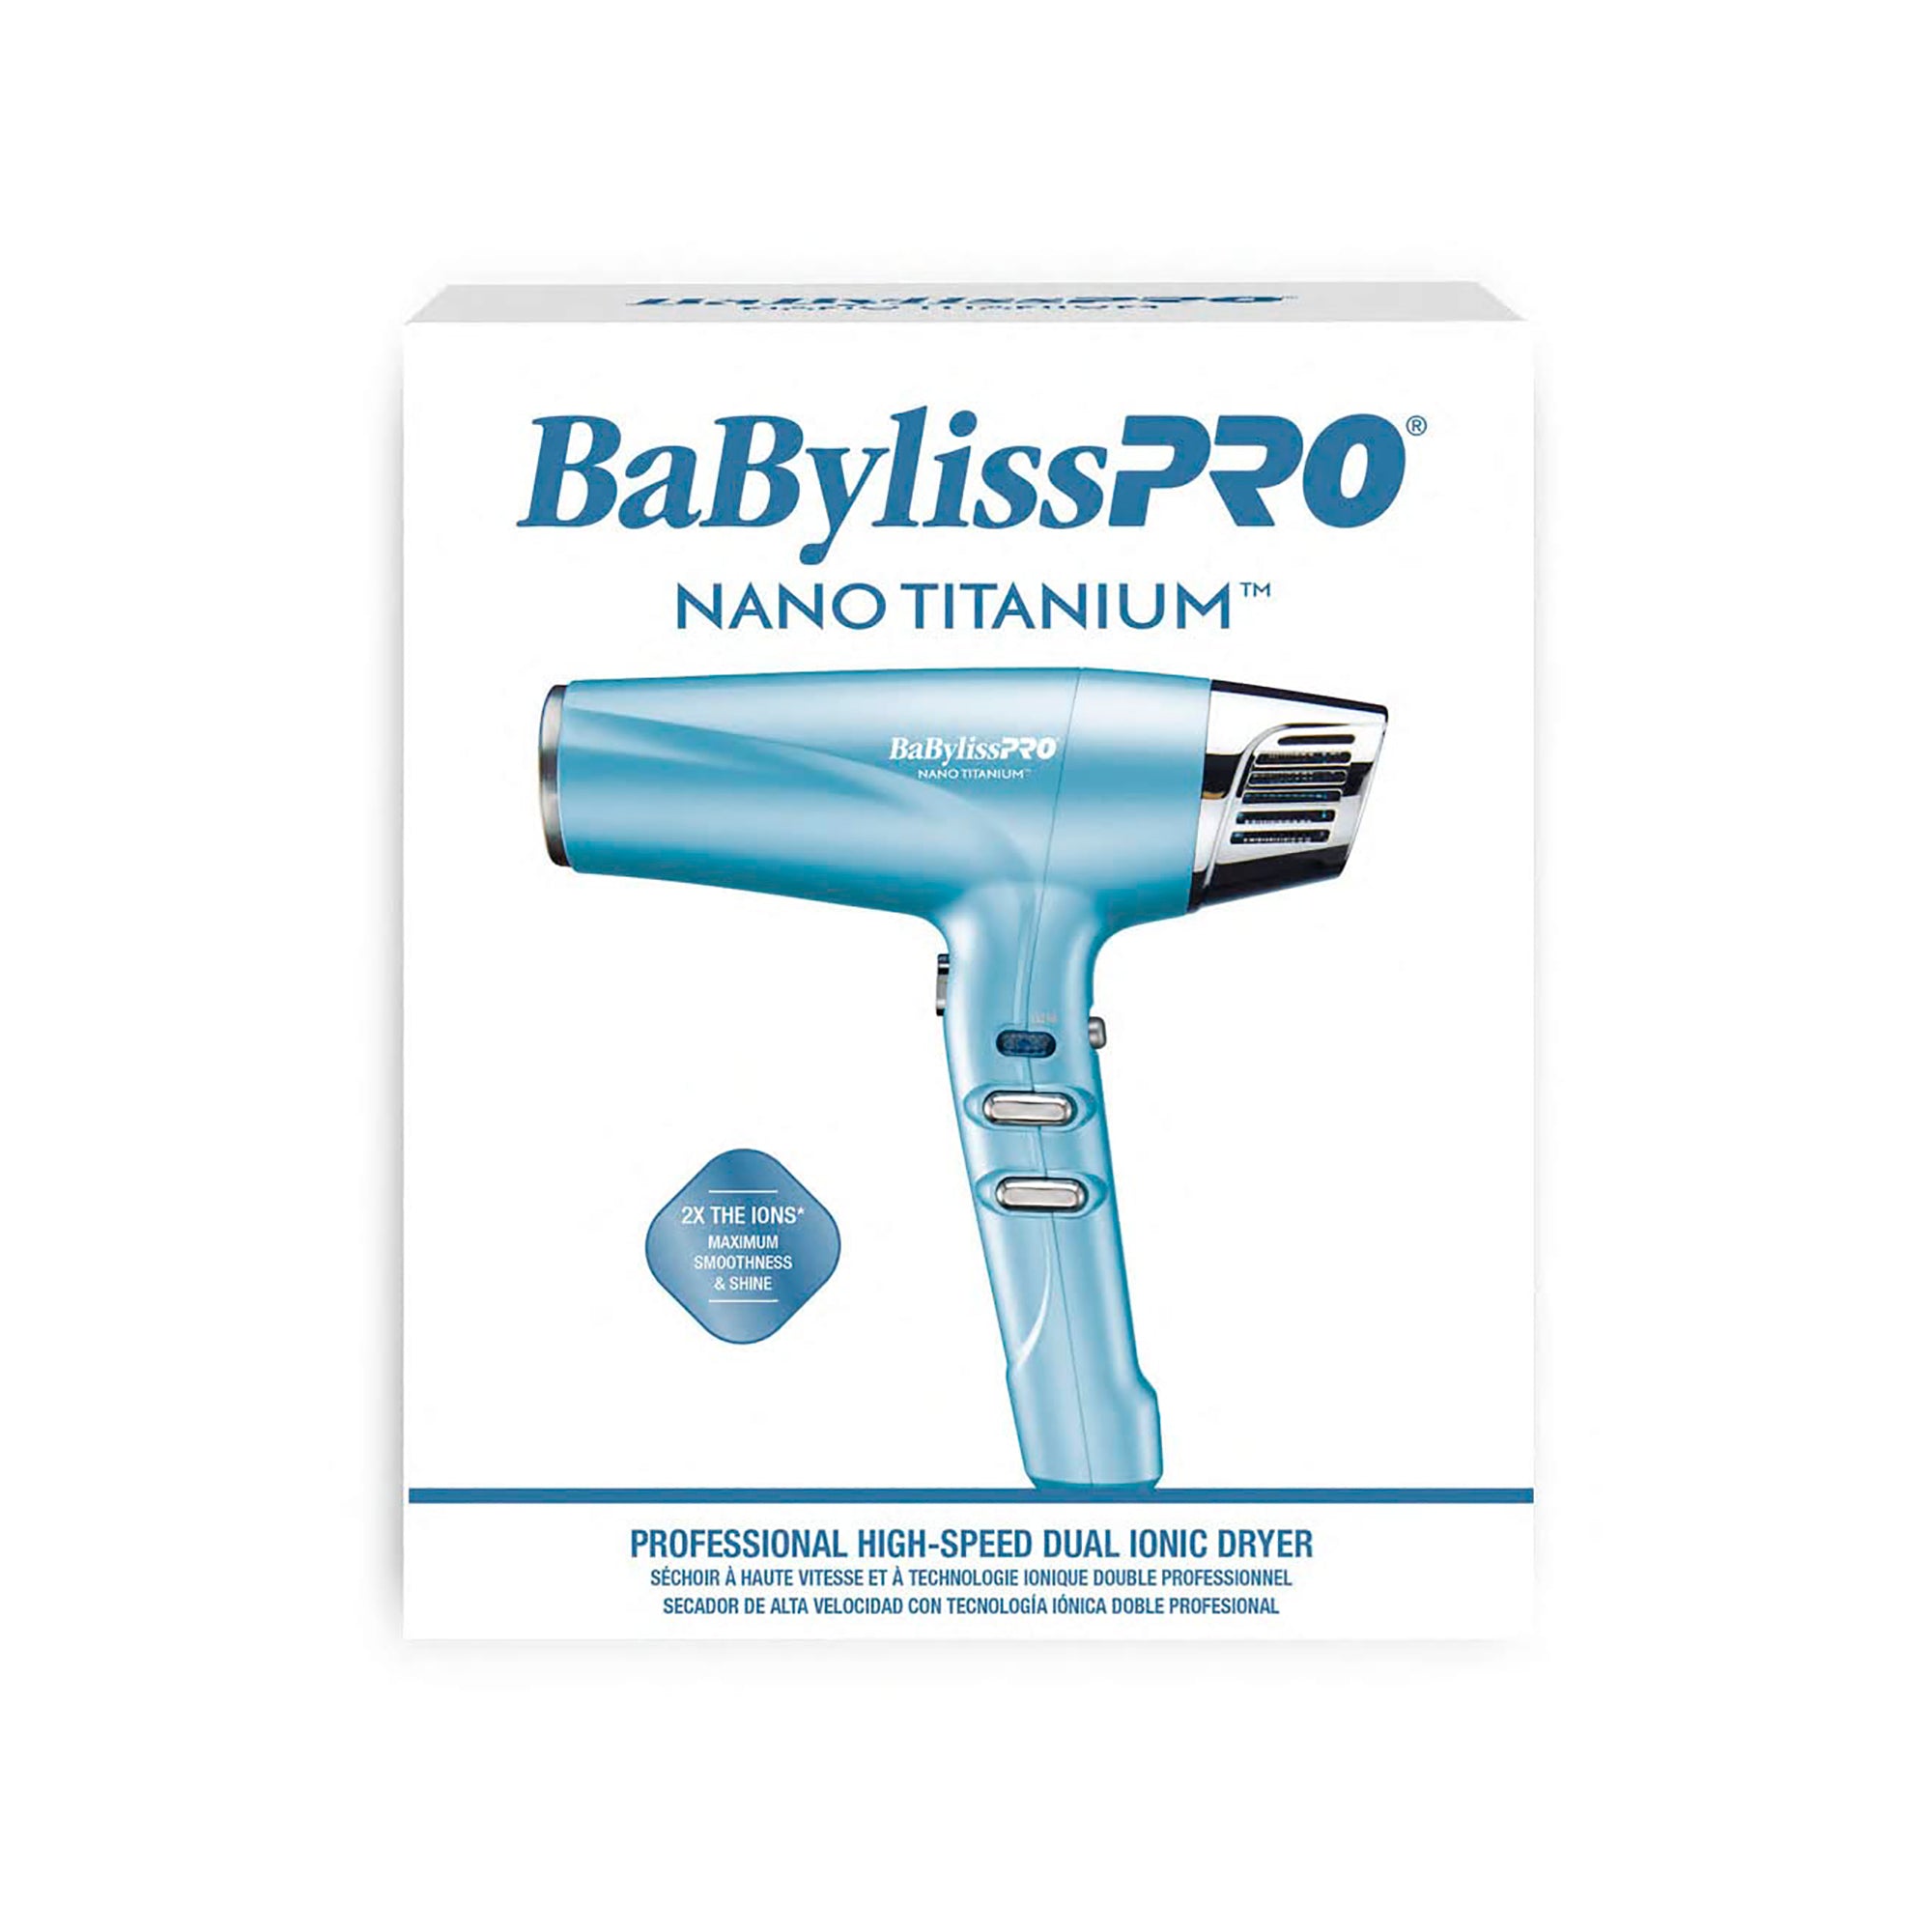 BabylissPRO Nano Titanium Professional High-Speed Dual Ionic Dryer - Item No. BNT9100 / BNT9100